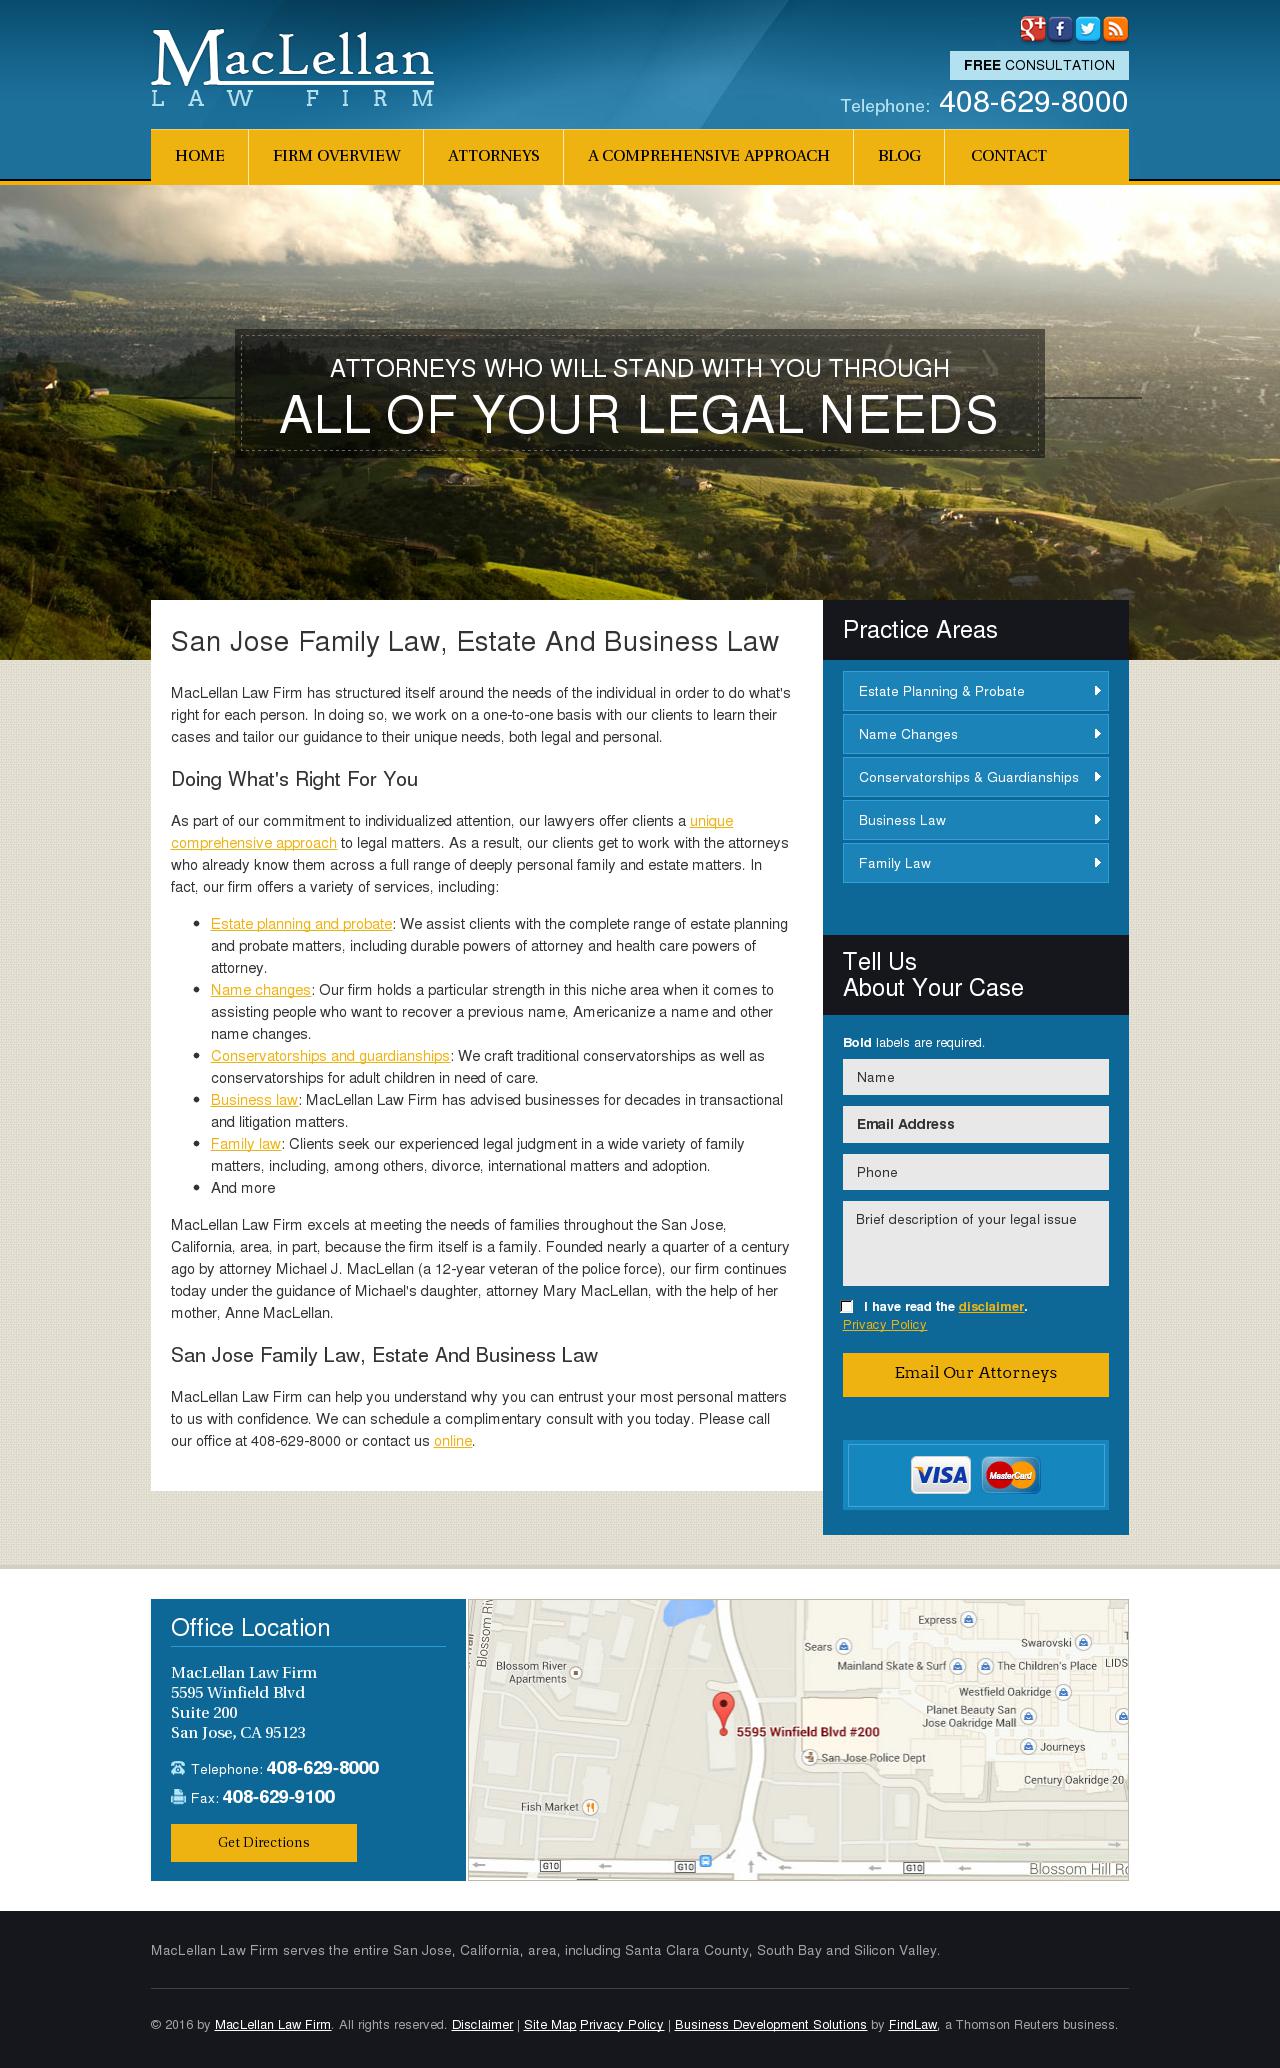 MacLellan Law Firm - San Jose CA Lawyers